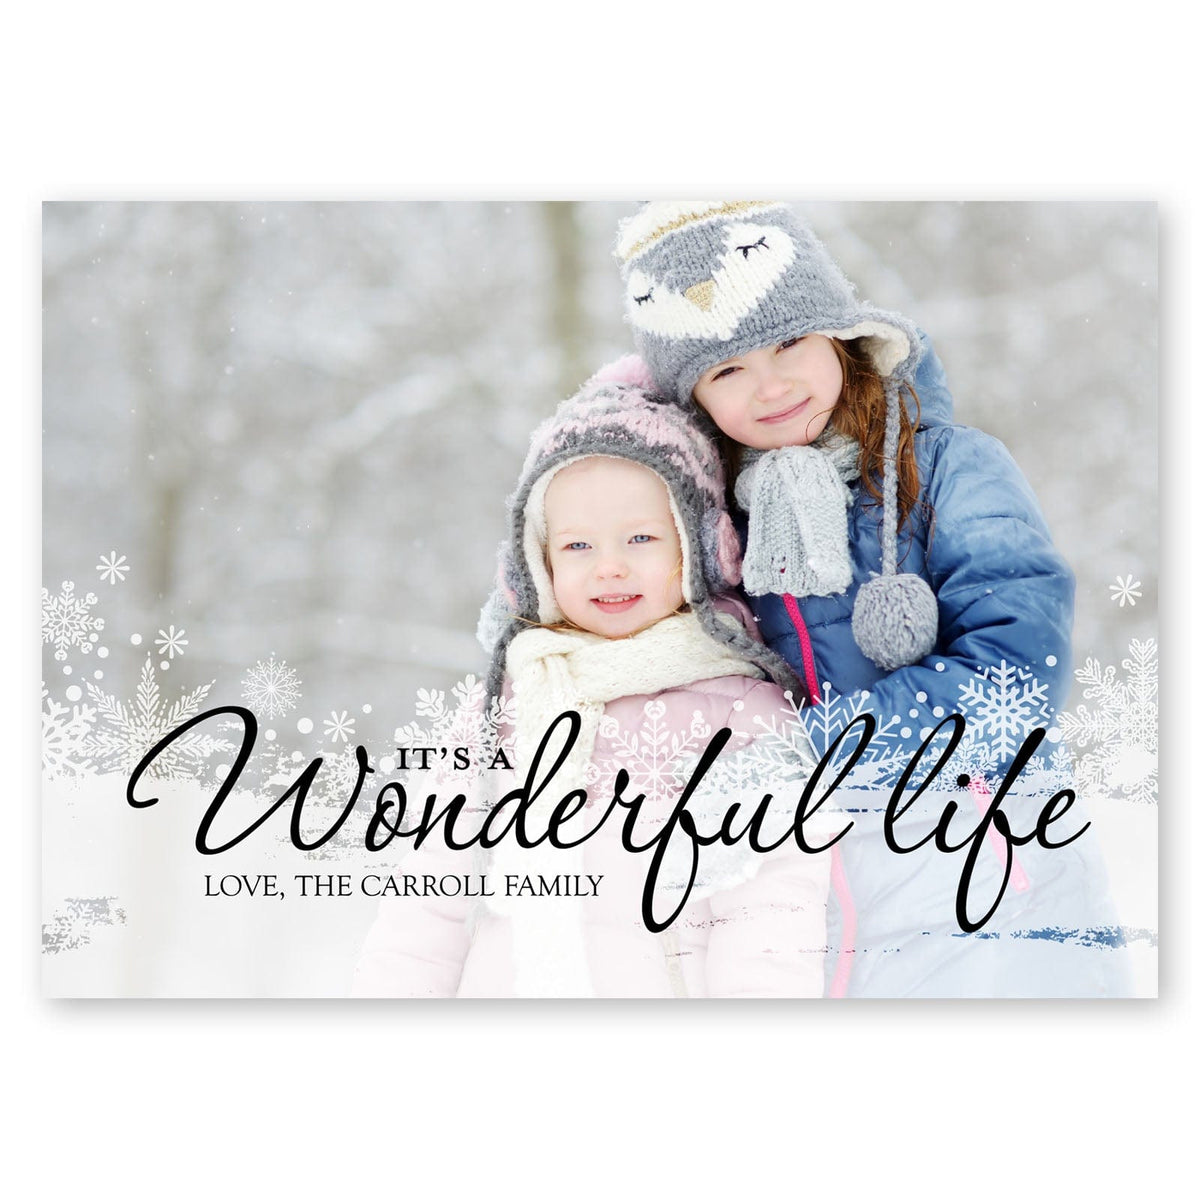 Snowy Wonderful Life Holiday Card Black Gartner Studios Christmas Card 95460